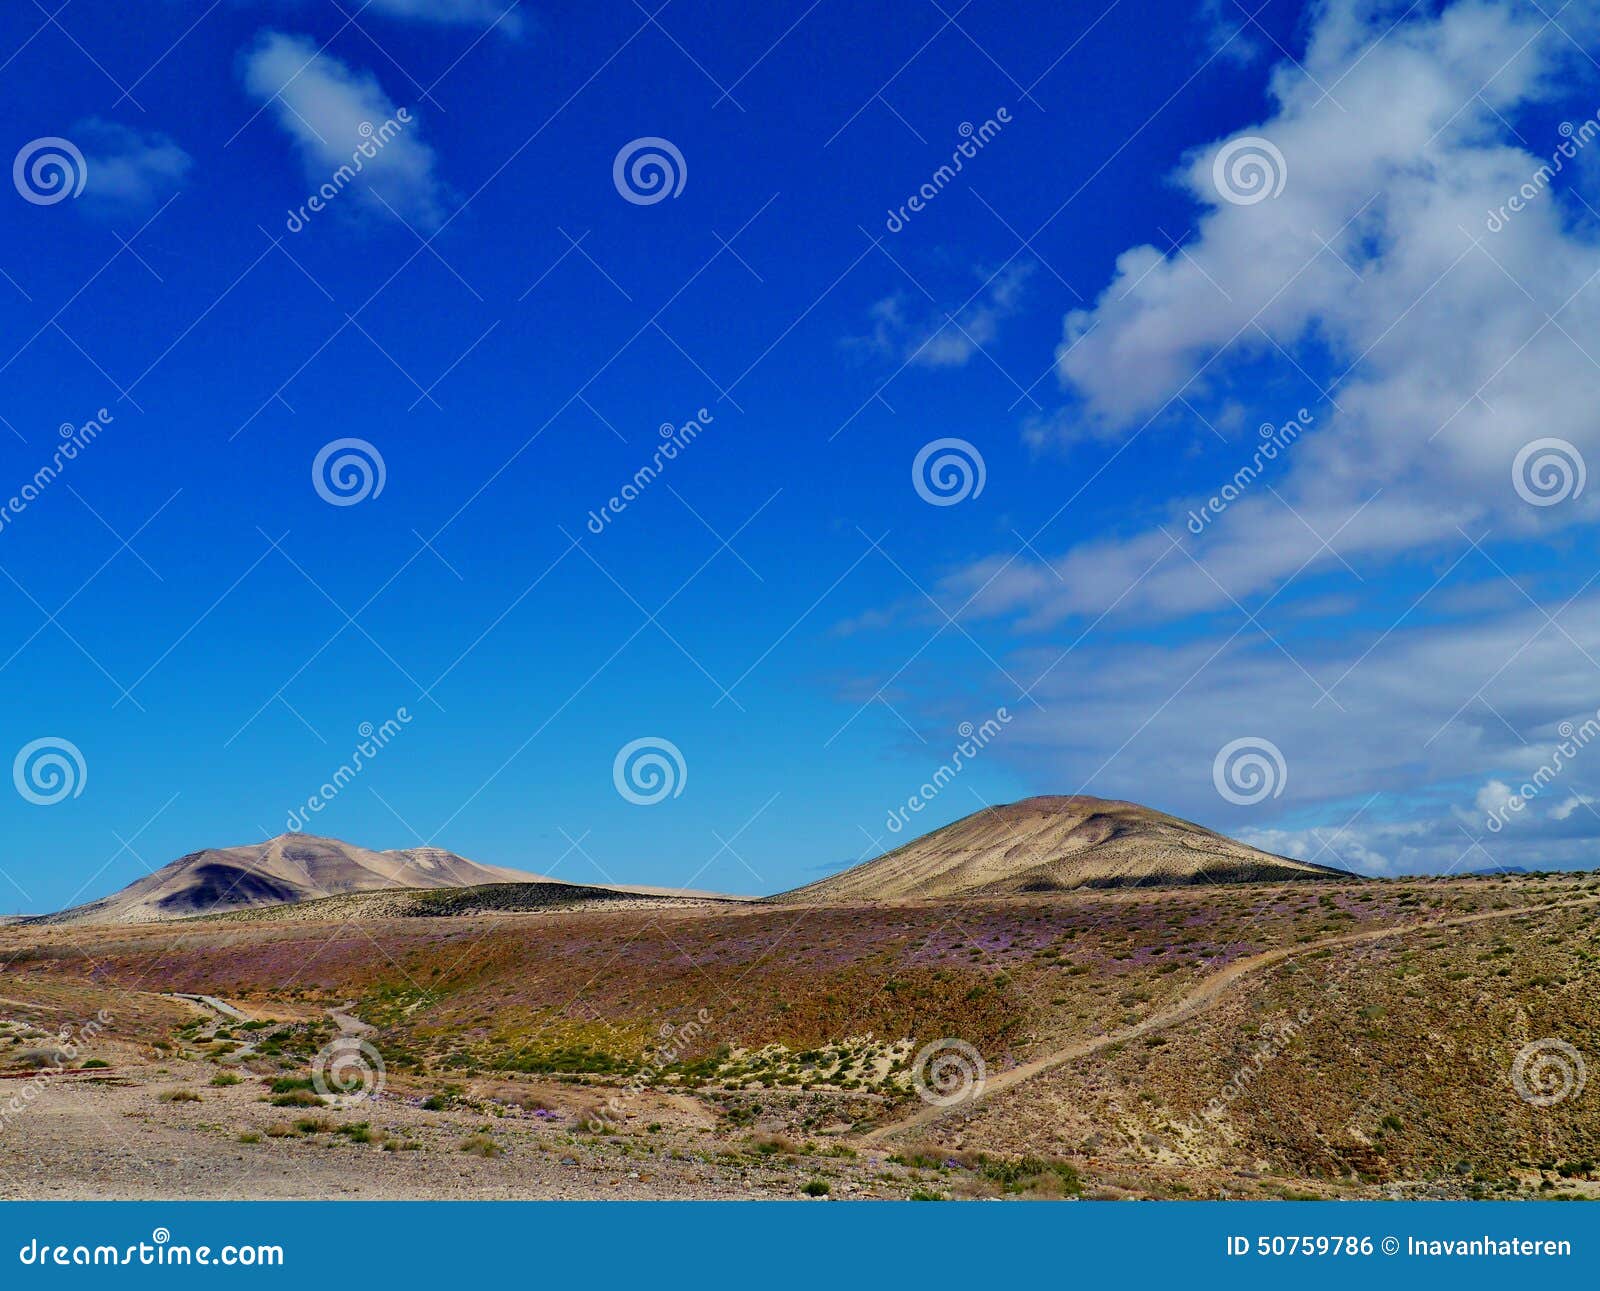 the volcanic desert near costa calma